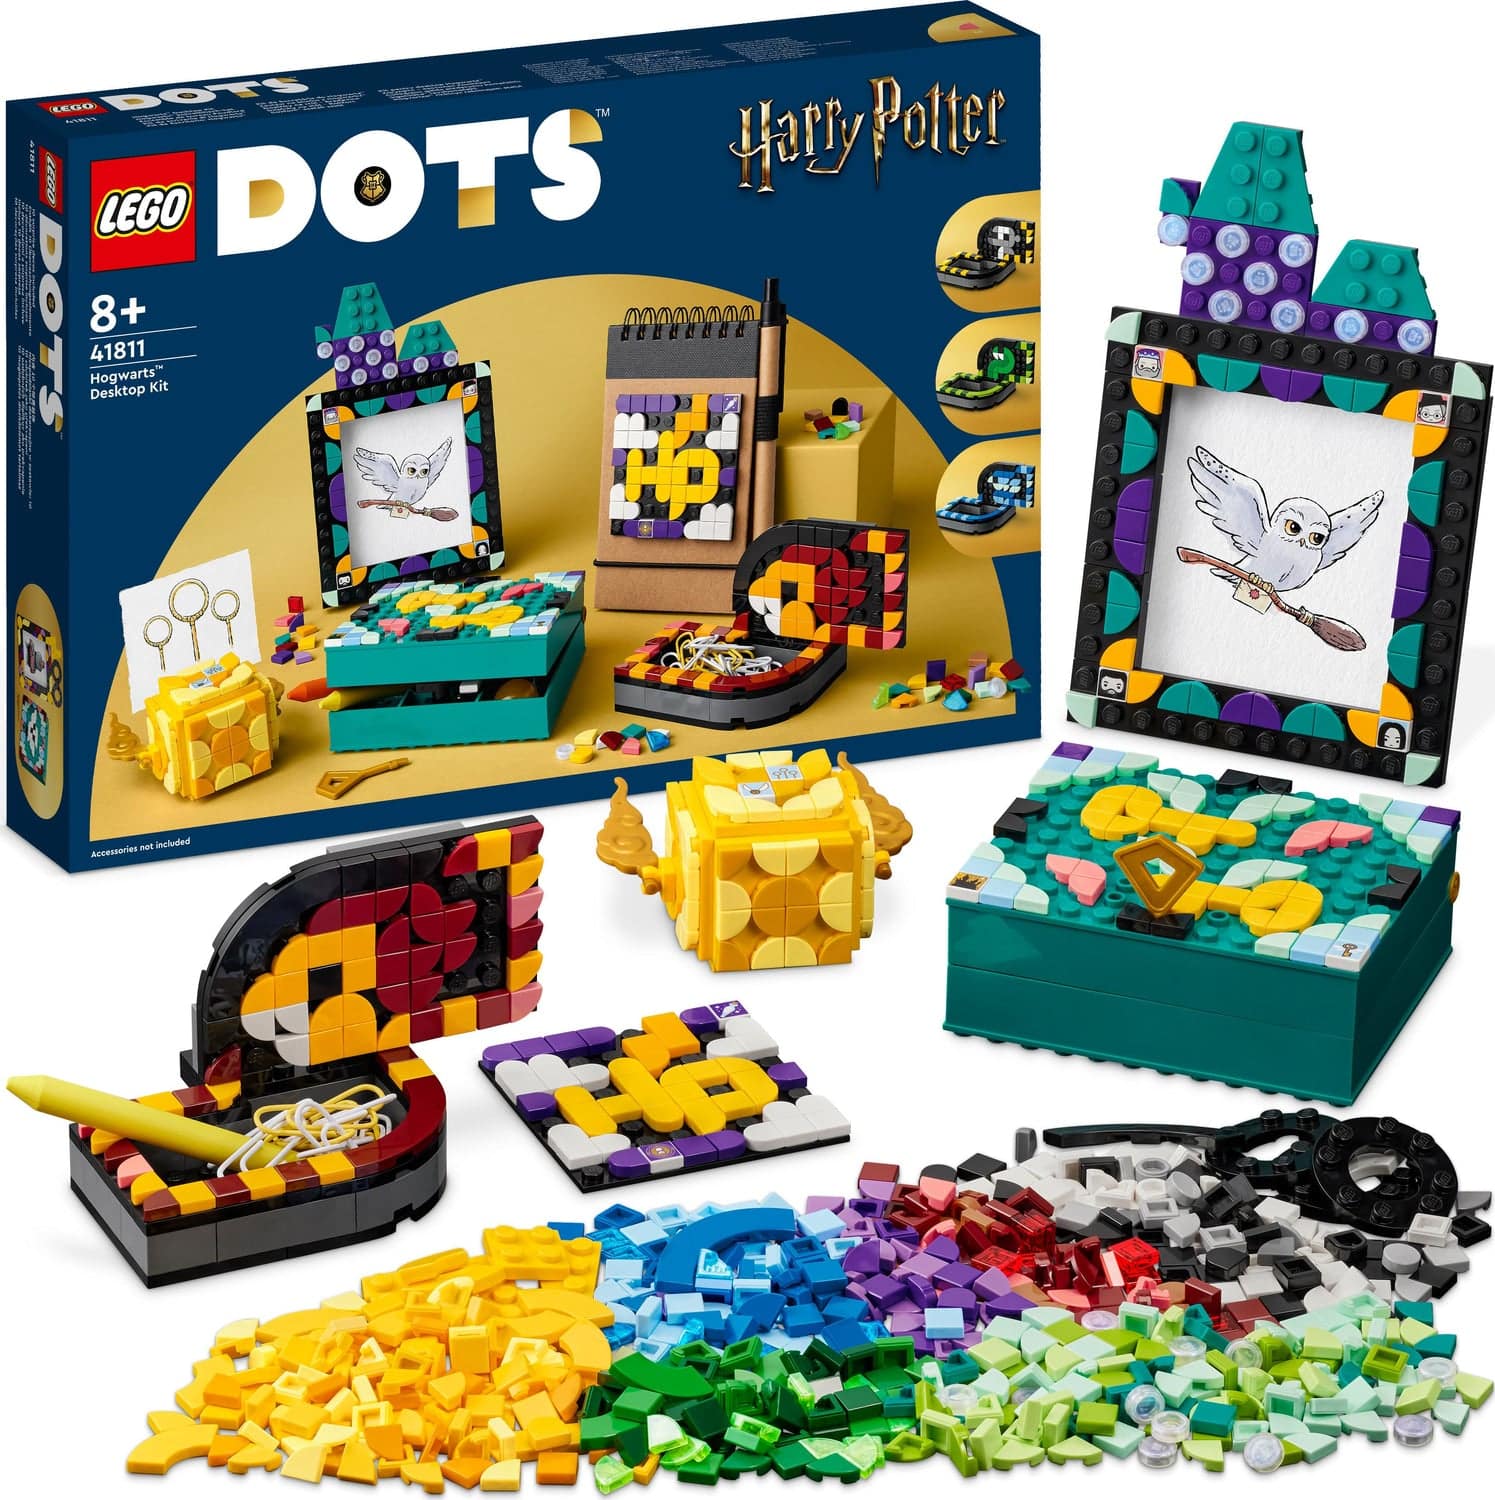 41811 Hogwarts Desktop Kit - A Child's Delight